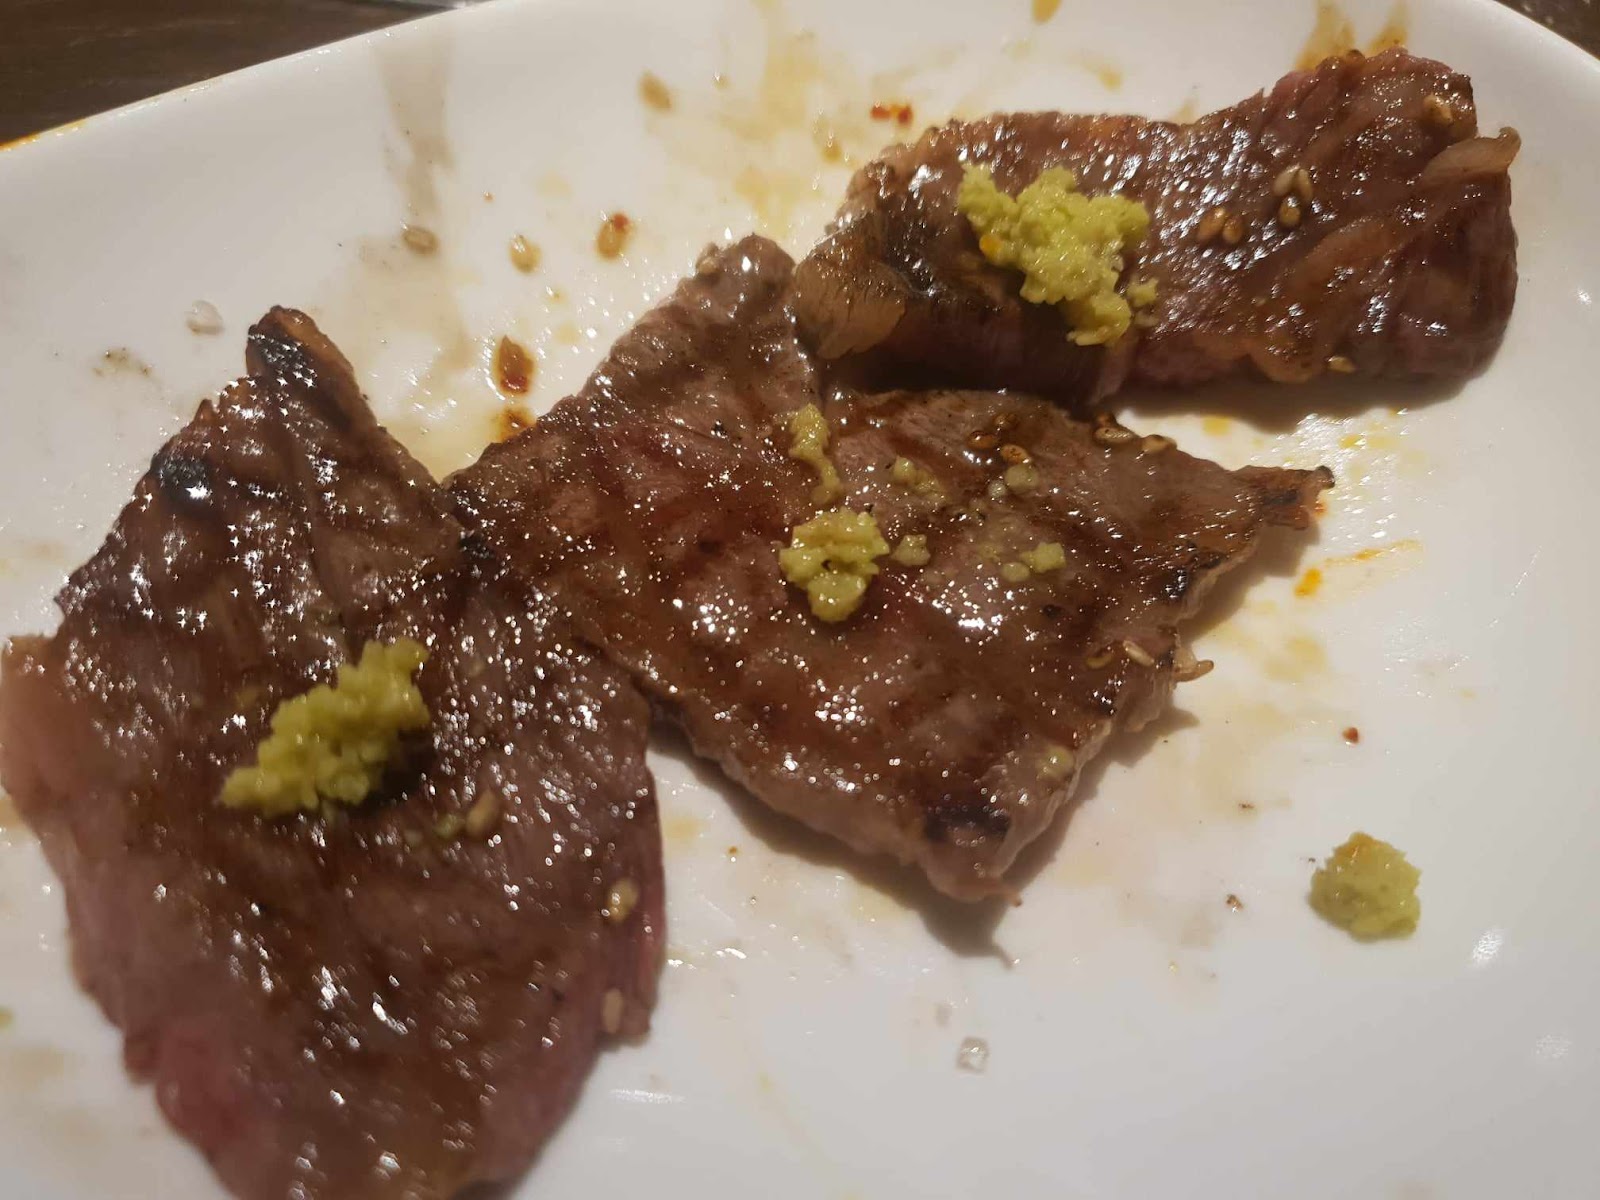 three cuts of Matsusaka wagyu cooked with wasabi on top